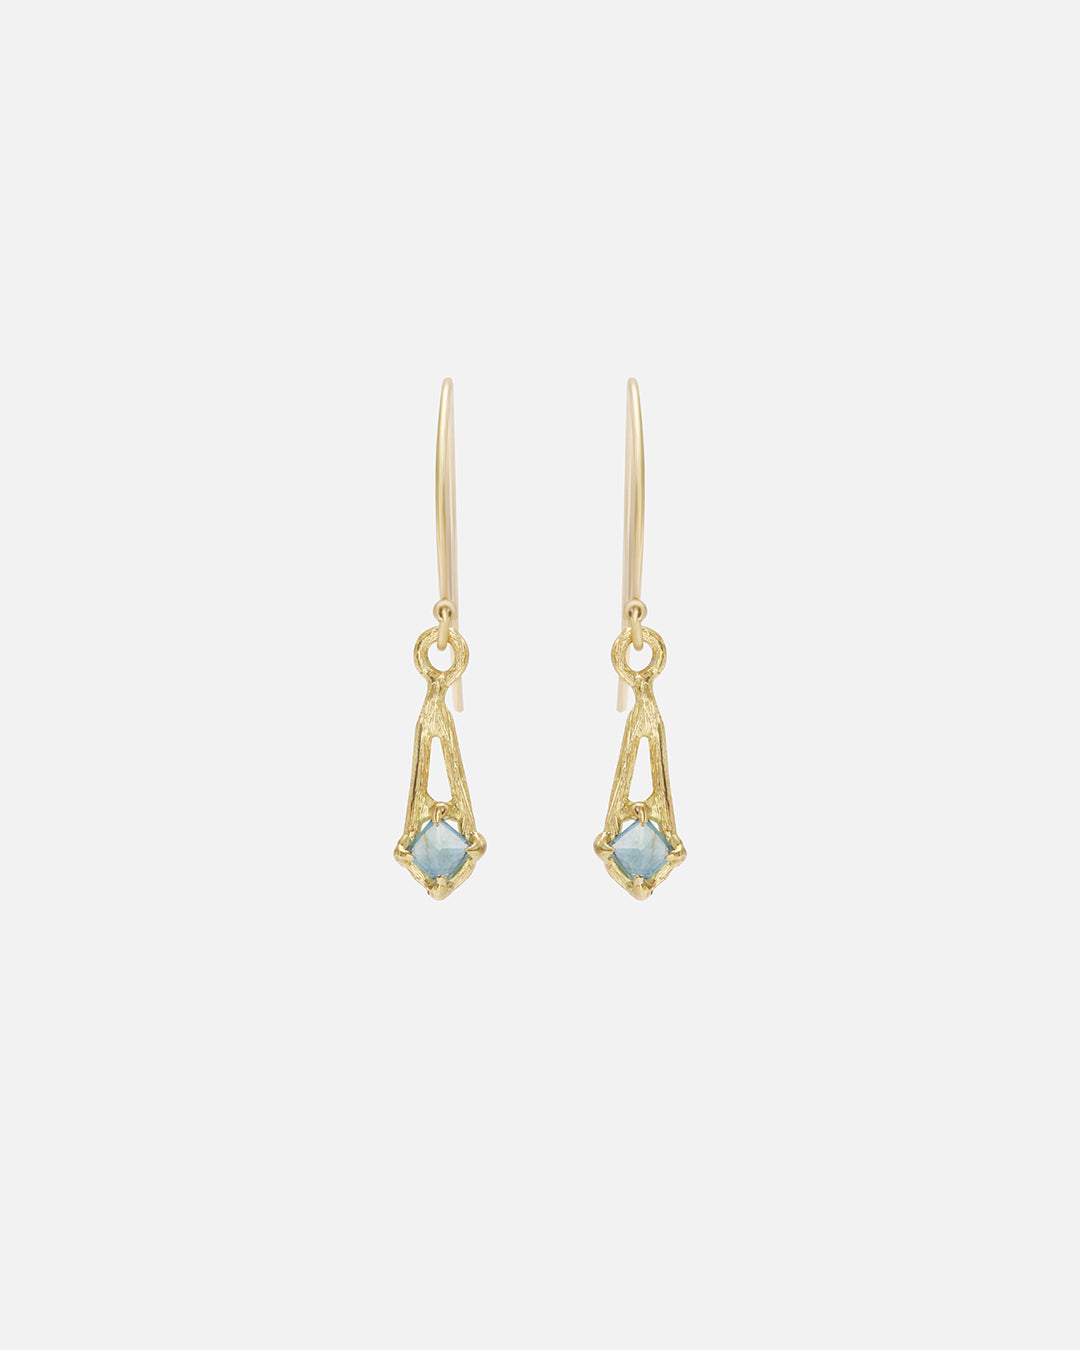 Silk / Pyramid Blue Sapphire Earrings By Hiroyo in earrings Category